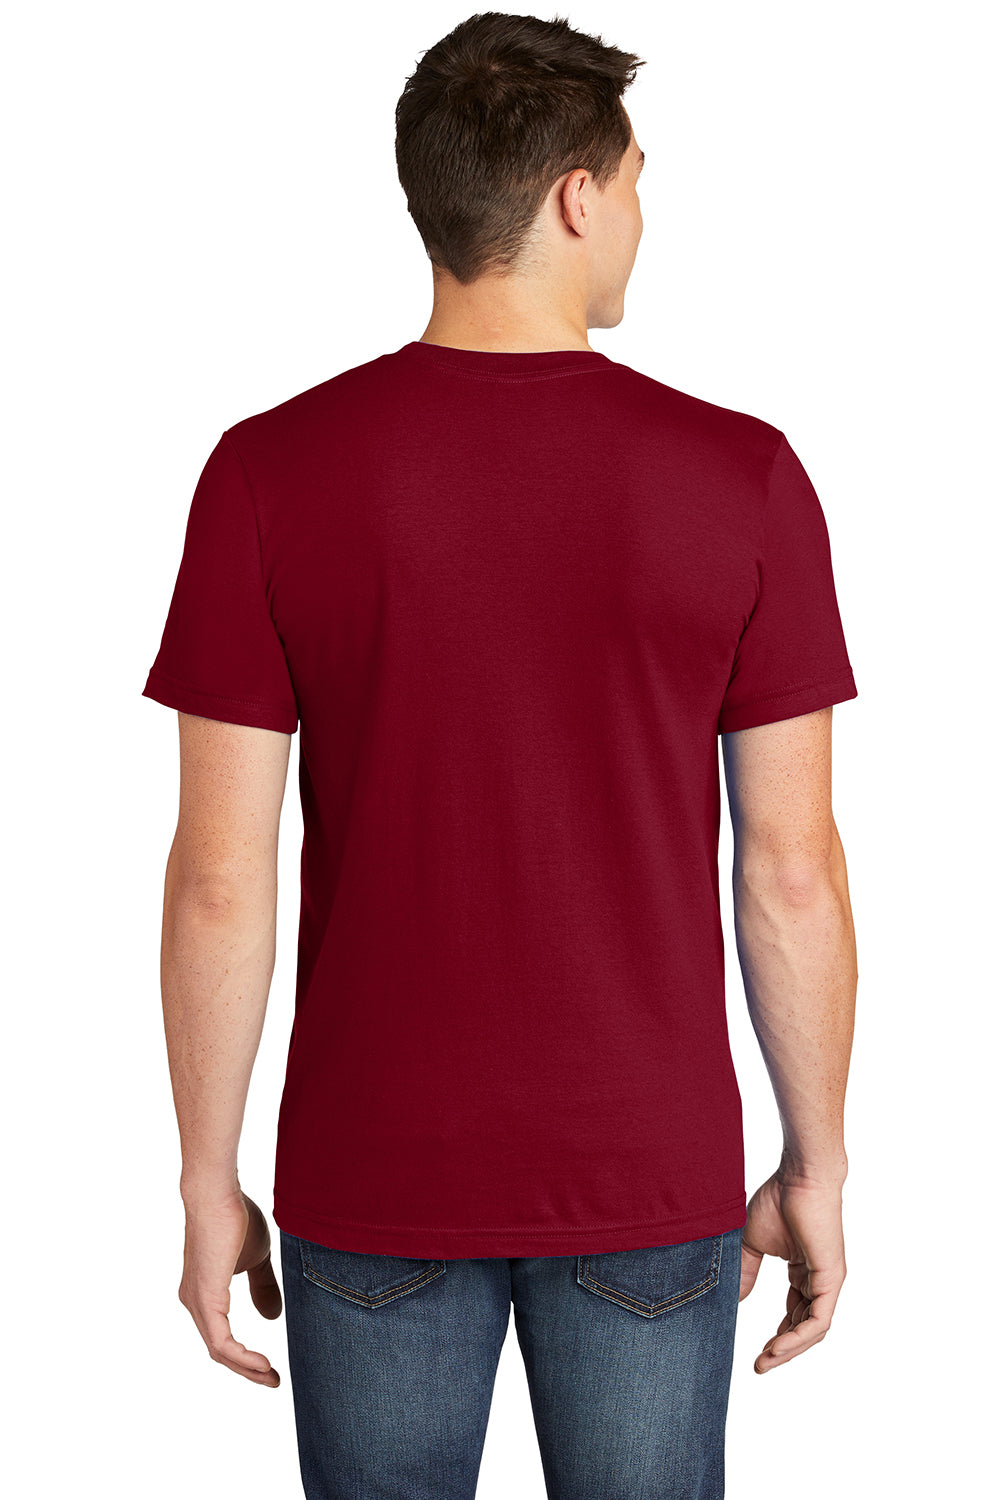 American Apparel 2001 Mens Fine Jersey Short Sleeve Crewneck T-Shirt Cranberry Red Model Back